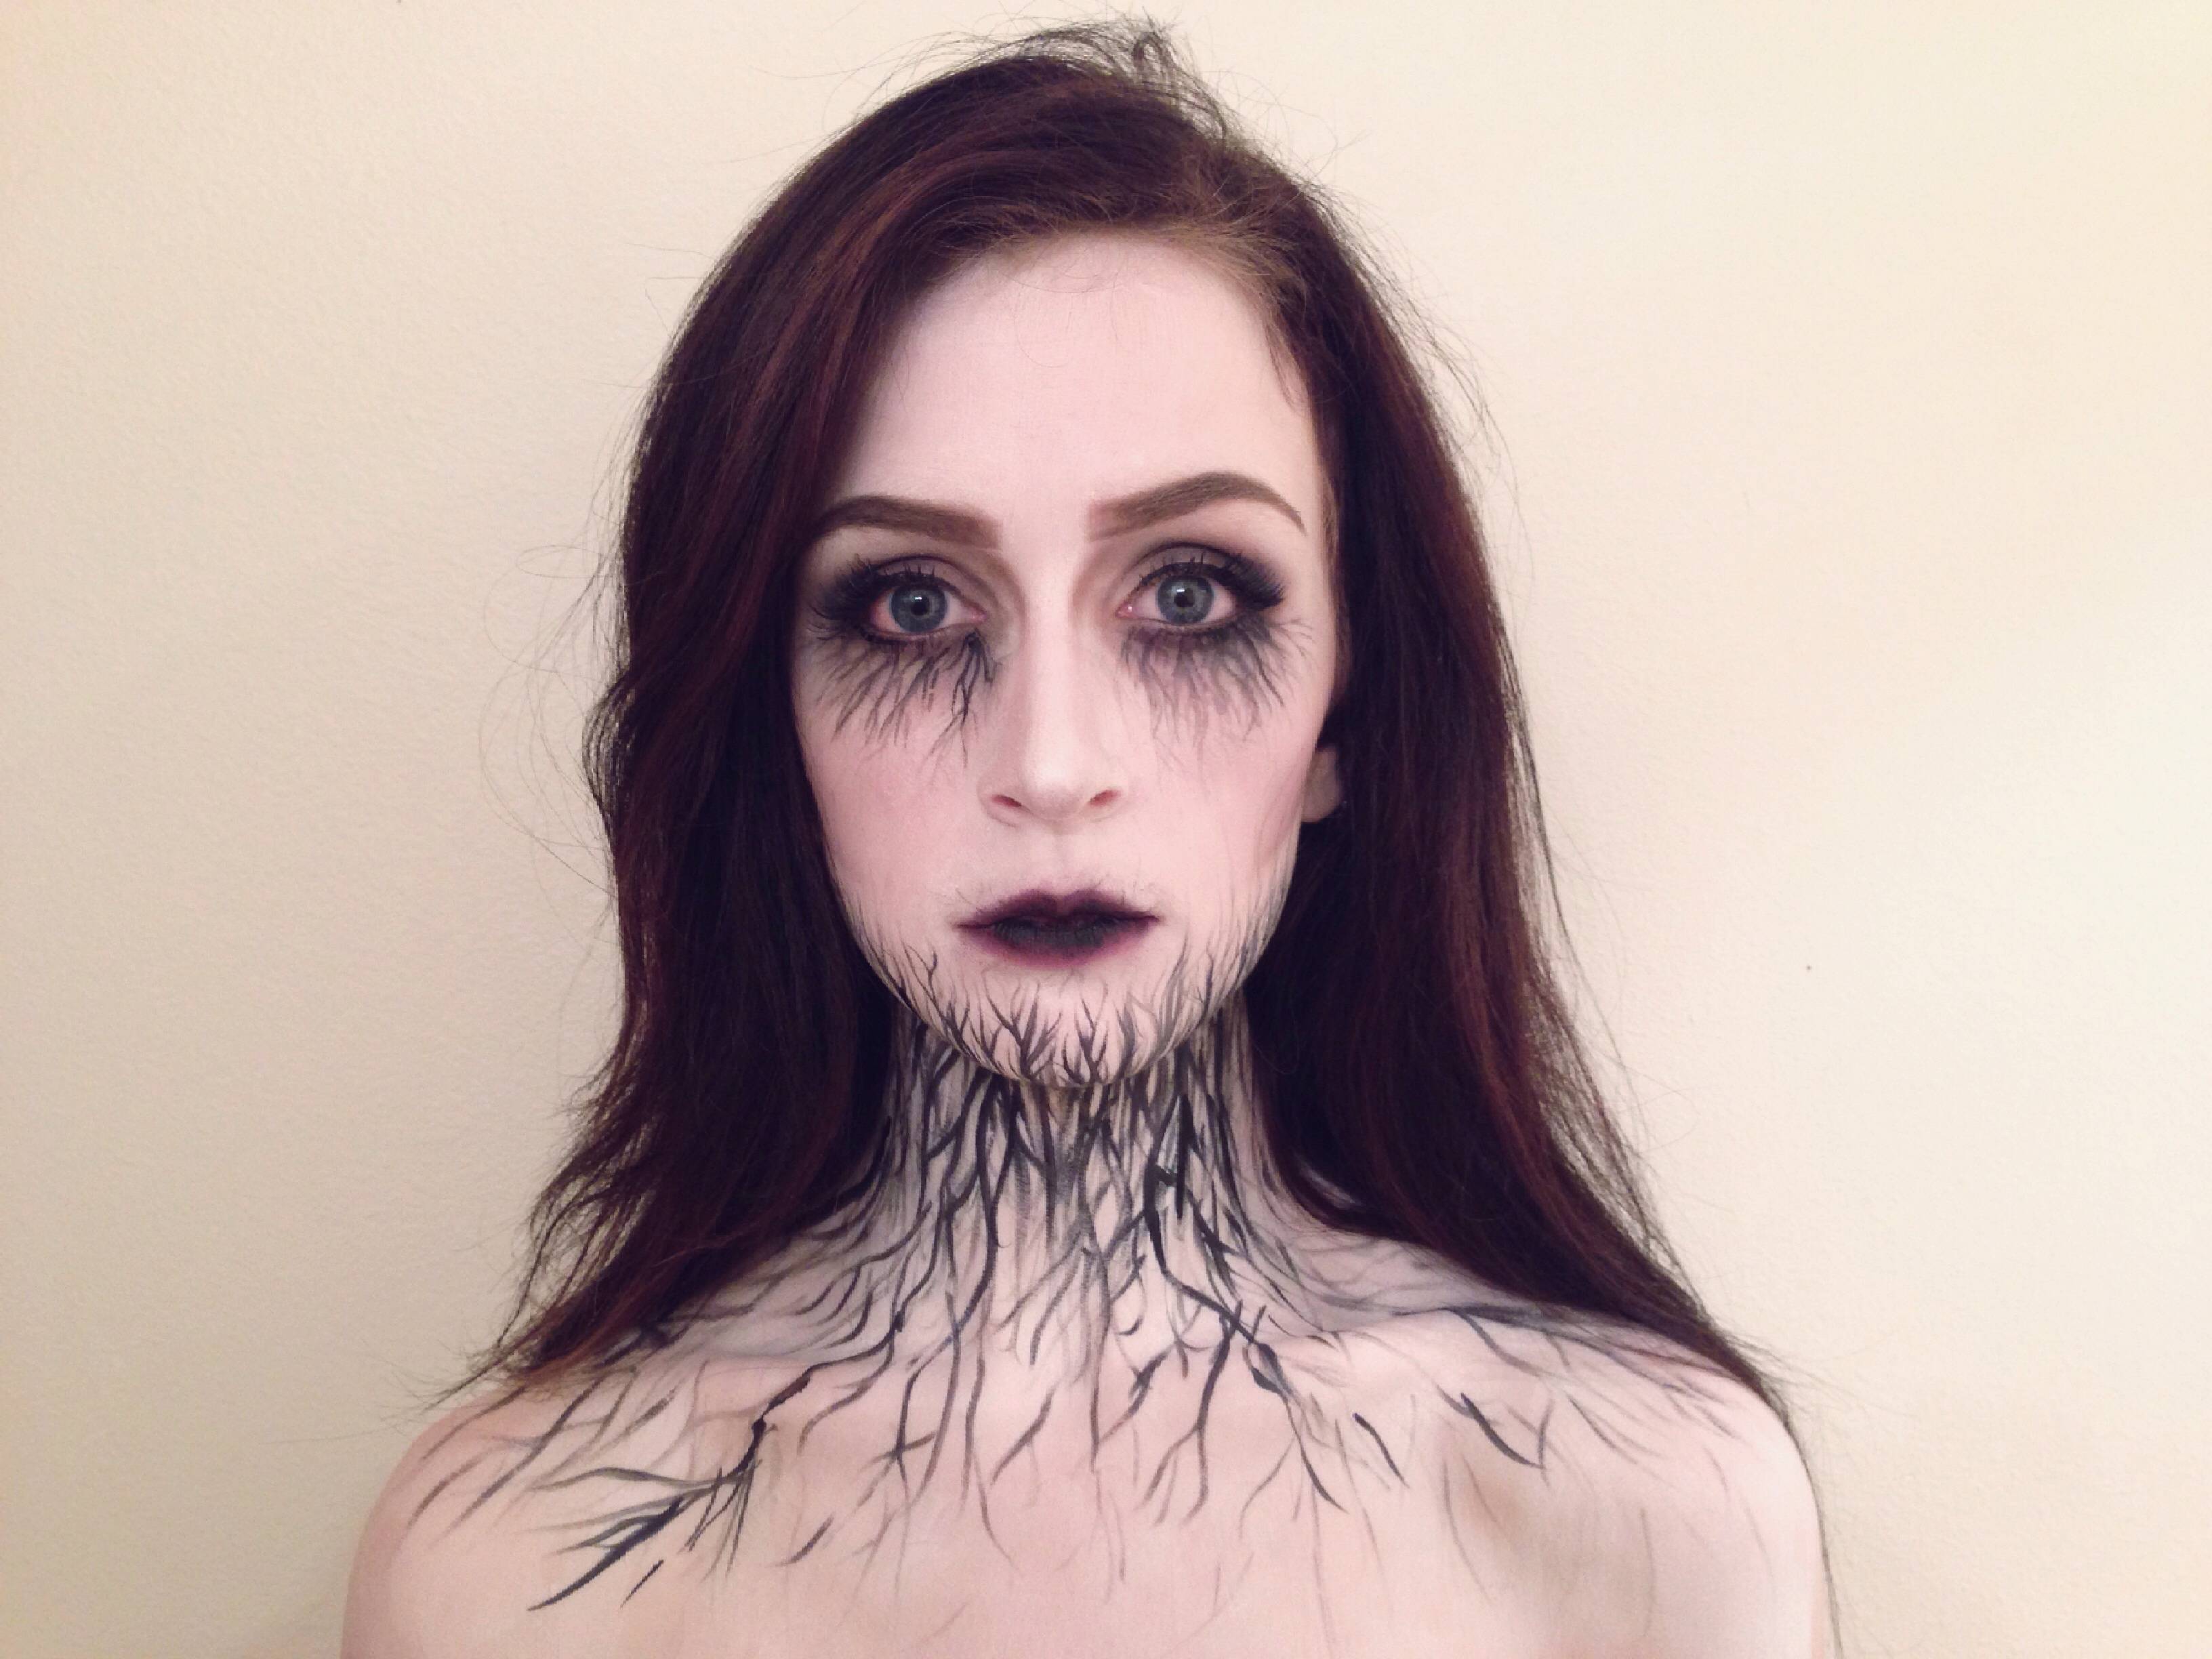 Horrifying Halloween Makeup Ideas That Look a Little Too Real